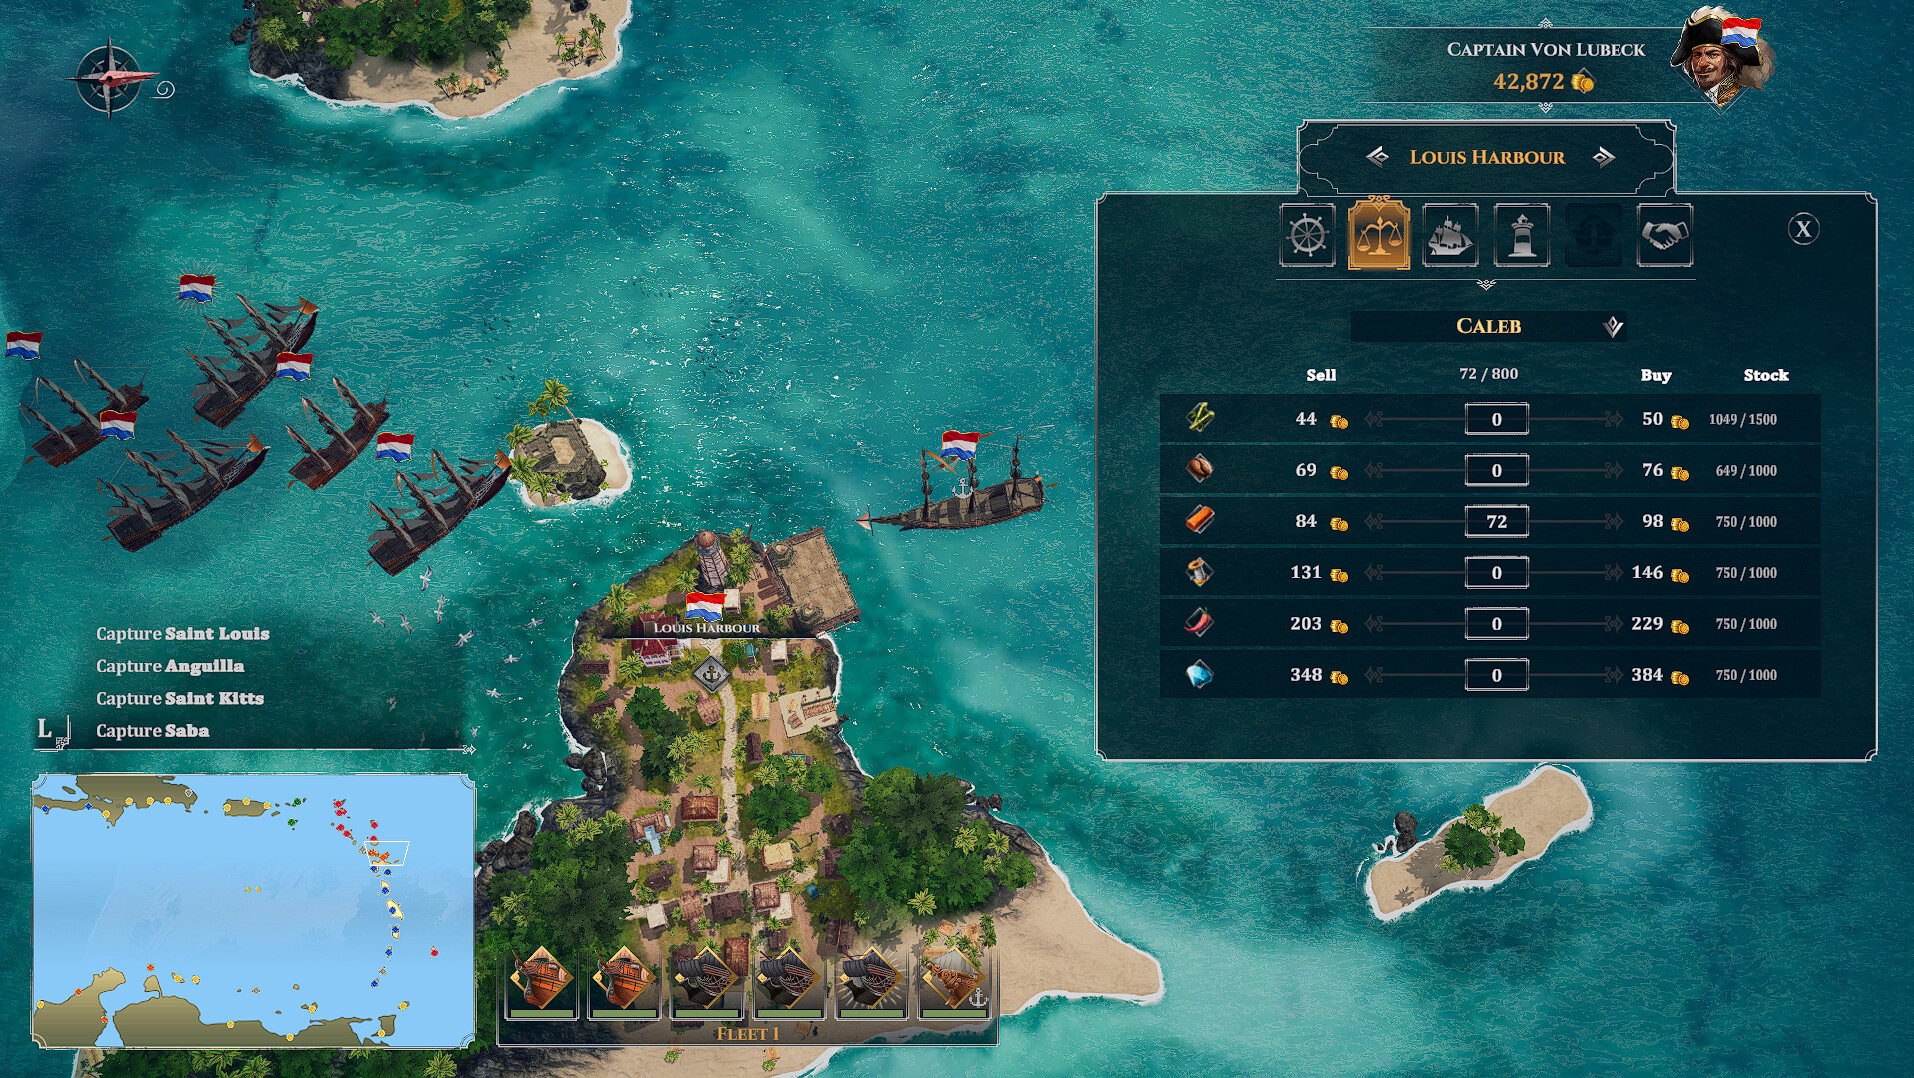 Corsairs - Battle of the Caribbean Featured Screenshot #1